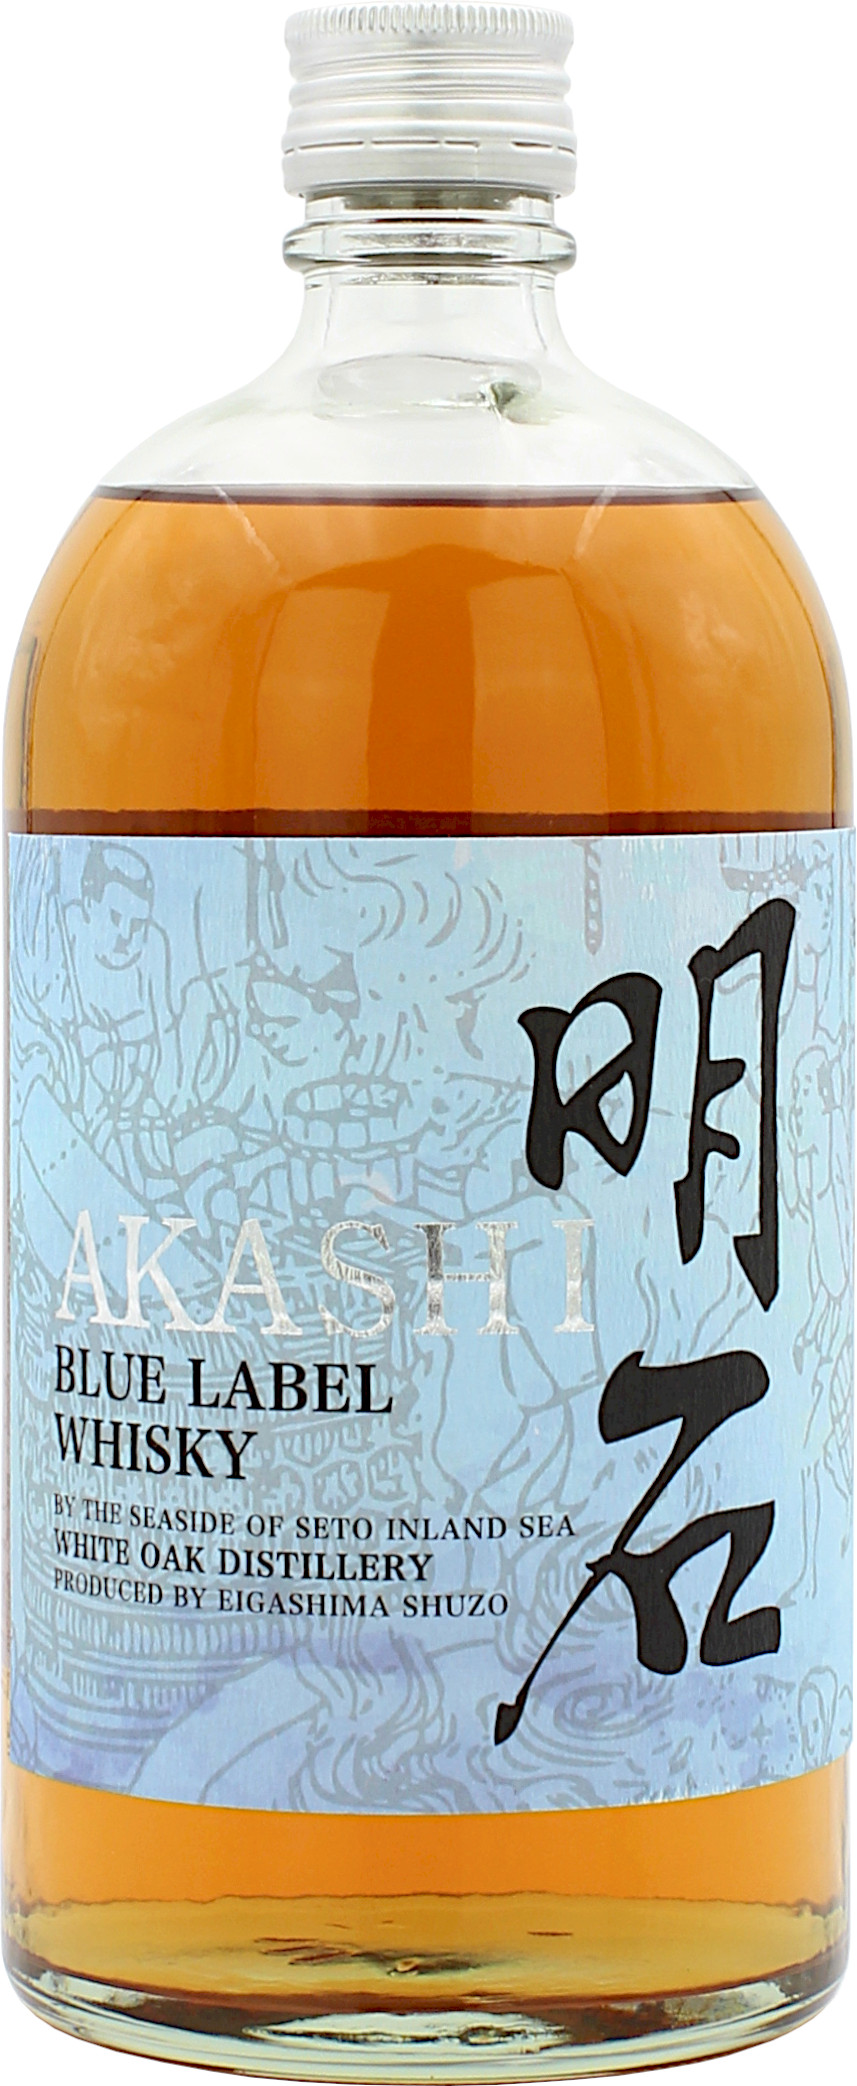 Akashi Blue Blended Whisky (Japan) 40.0% 0,7l